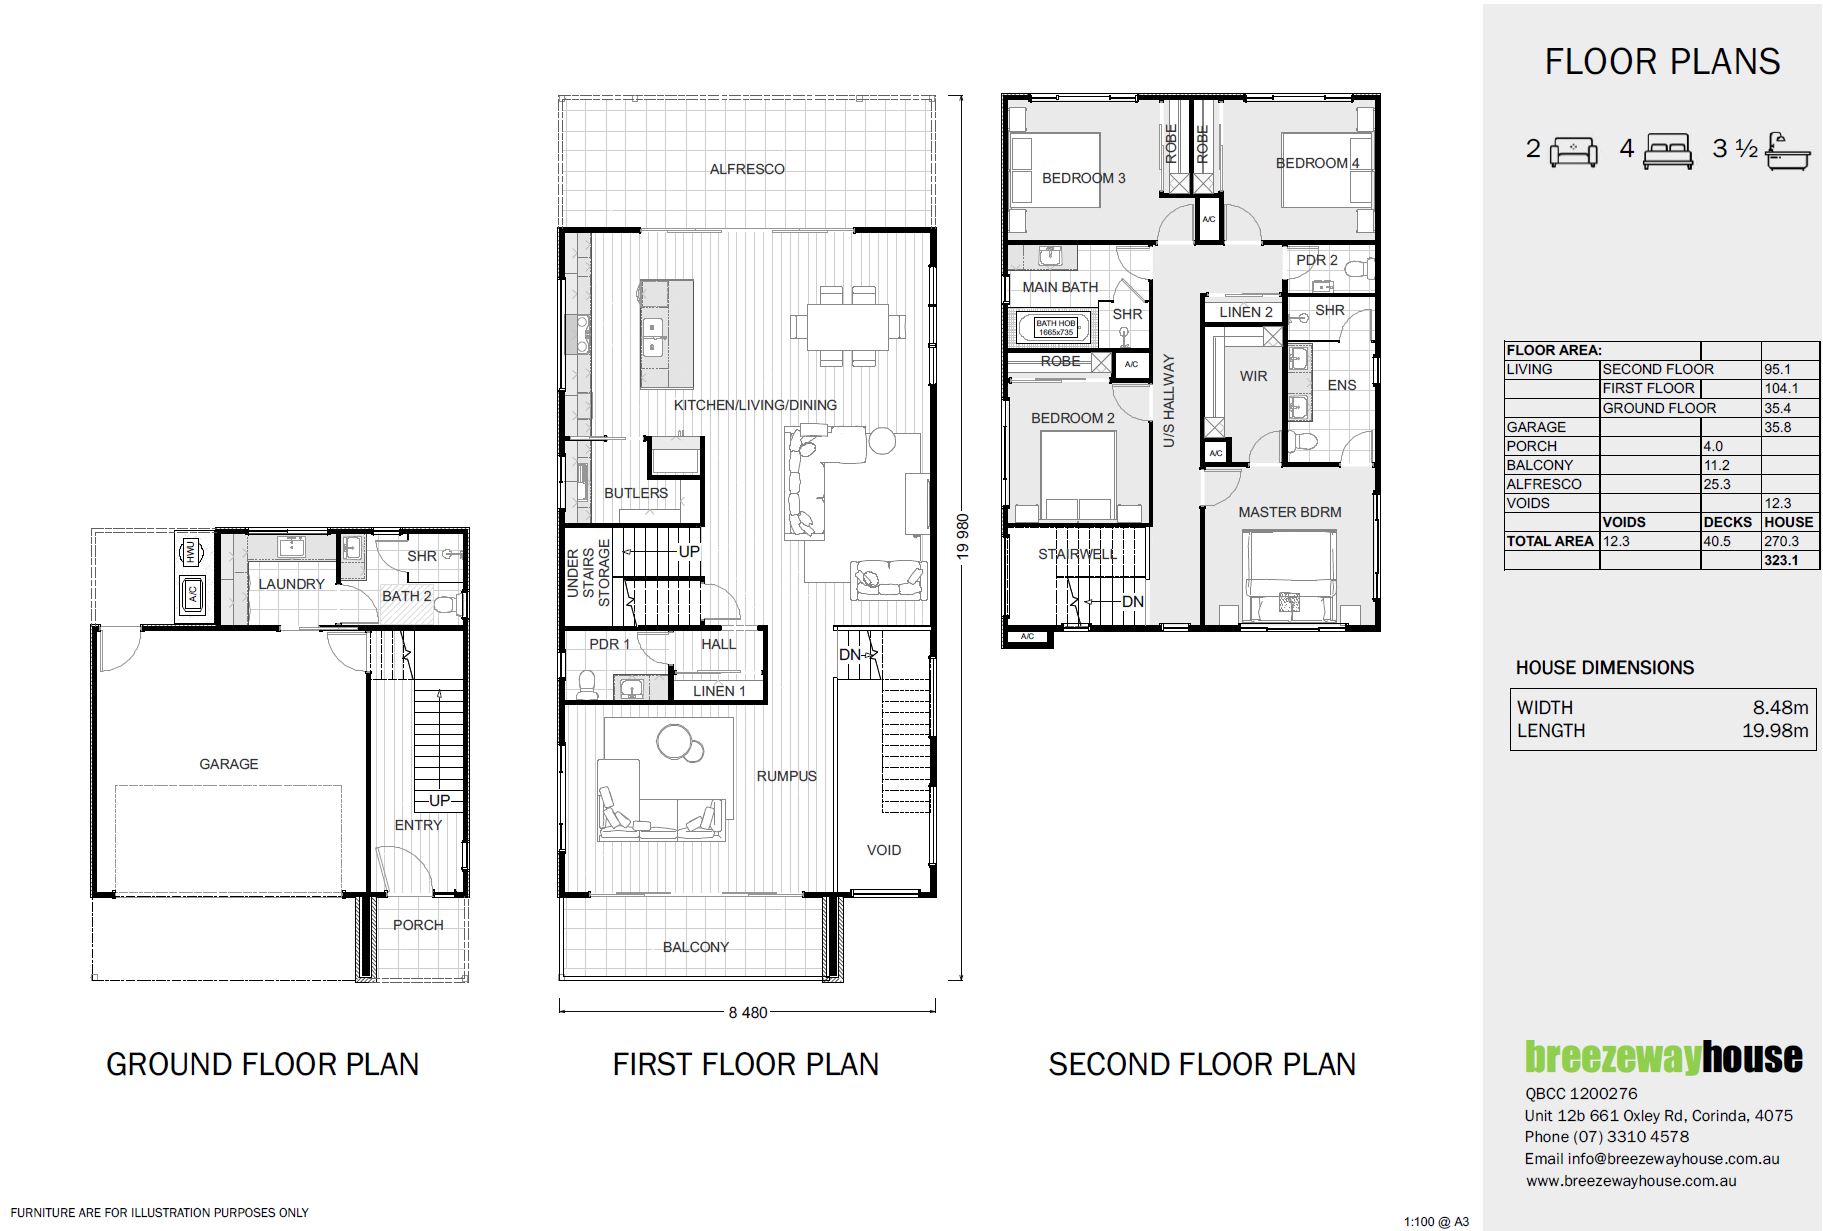 Victor: Home Design | Brisbane - Breezeway House